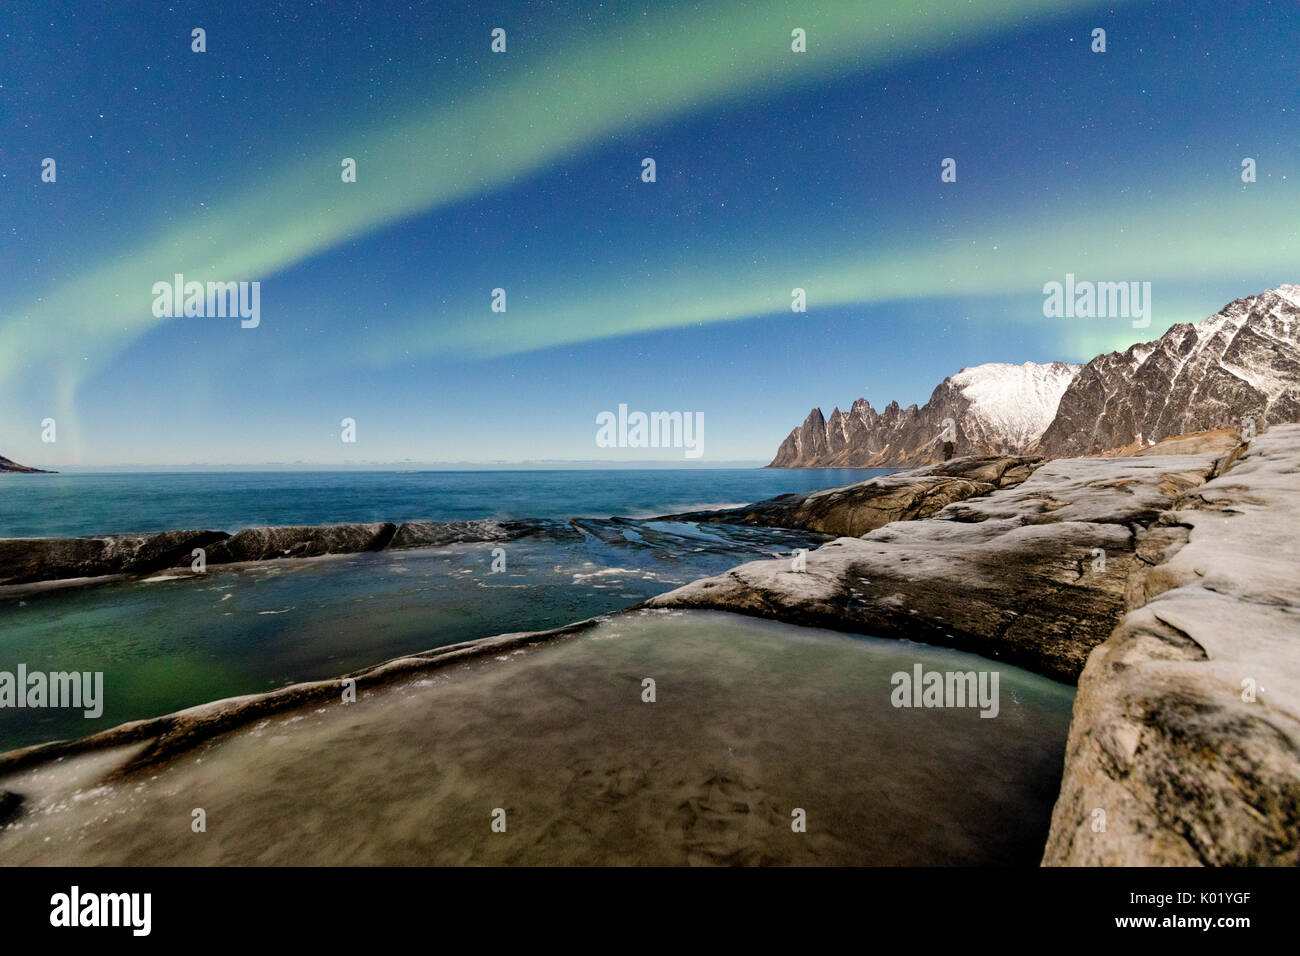 The Northern Lights and stars illuminate the rocky peaks and icy sea Tungeneset Senja Tromsø Norway Europe Stock Photo